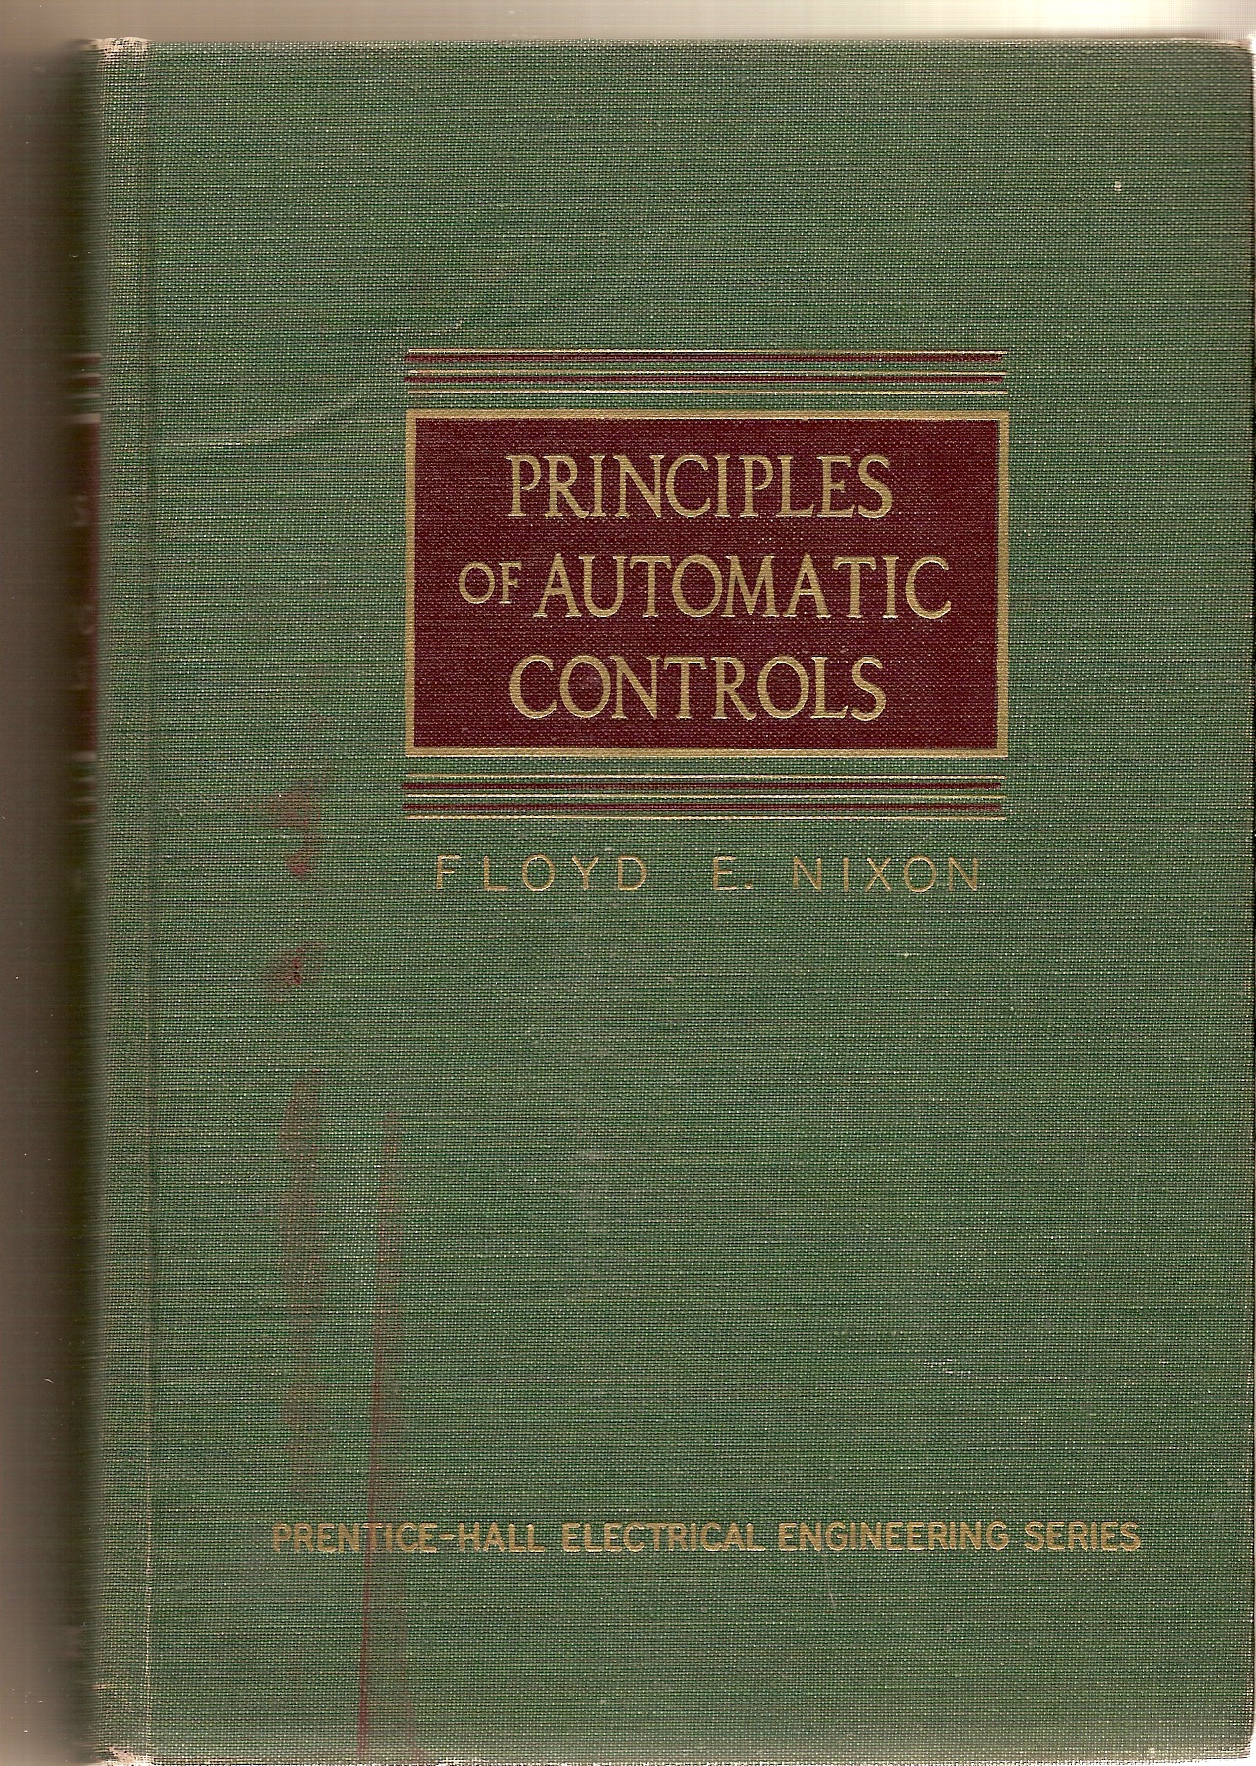 NIXON FLOYD E. - Principles of Automatic Controls